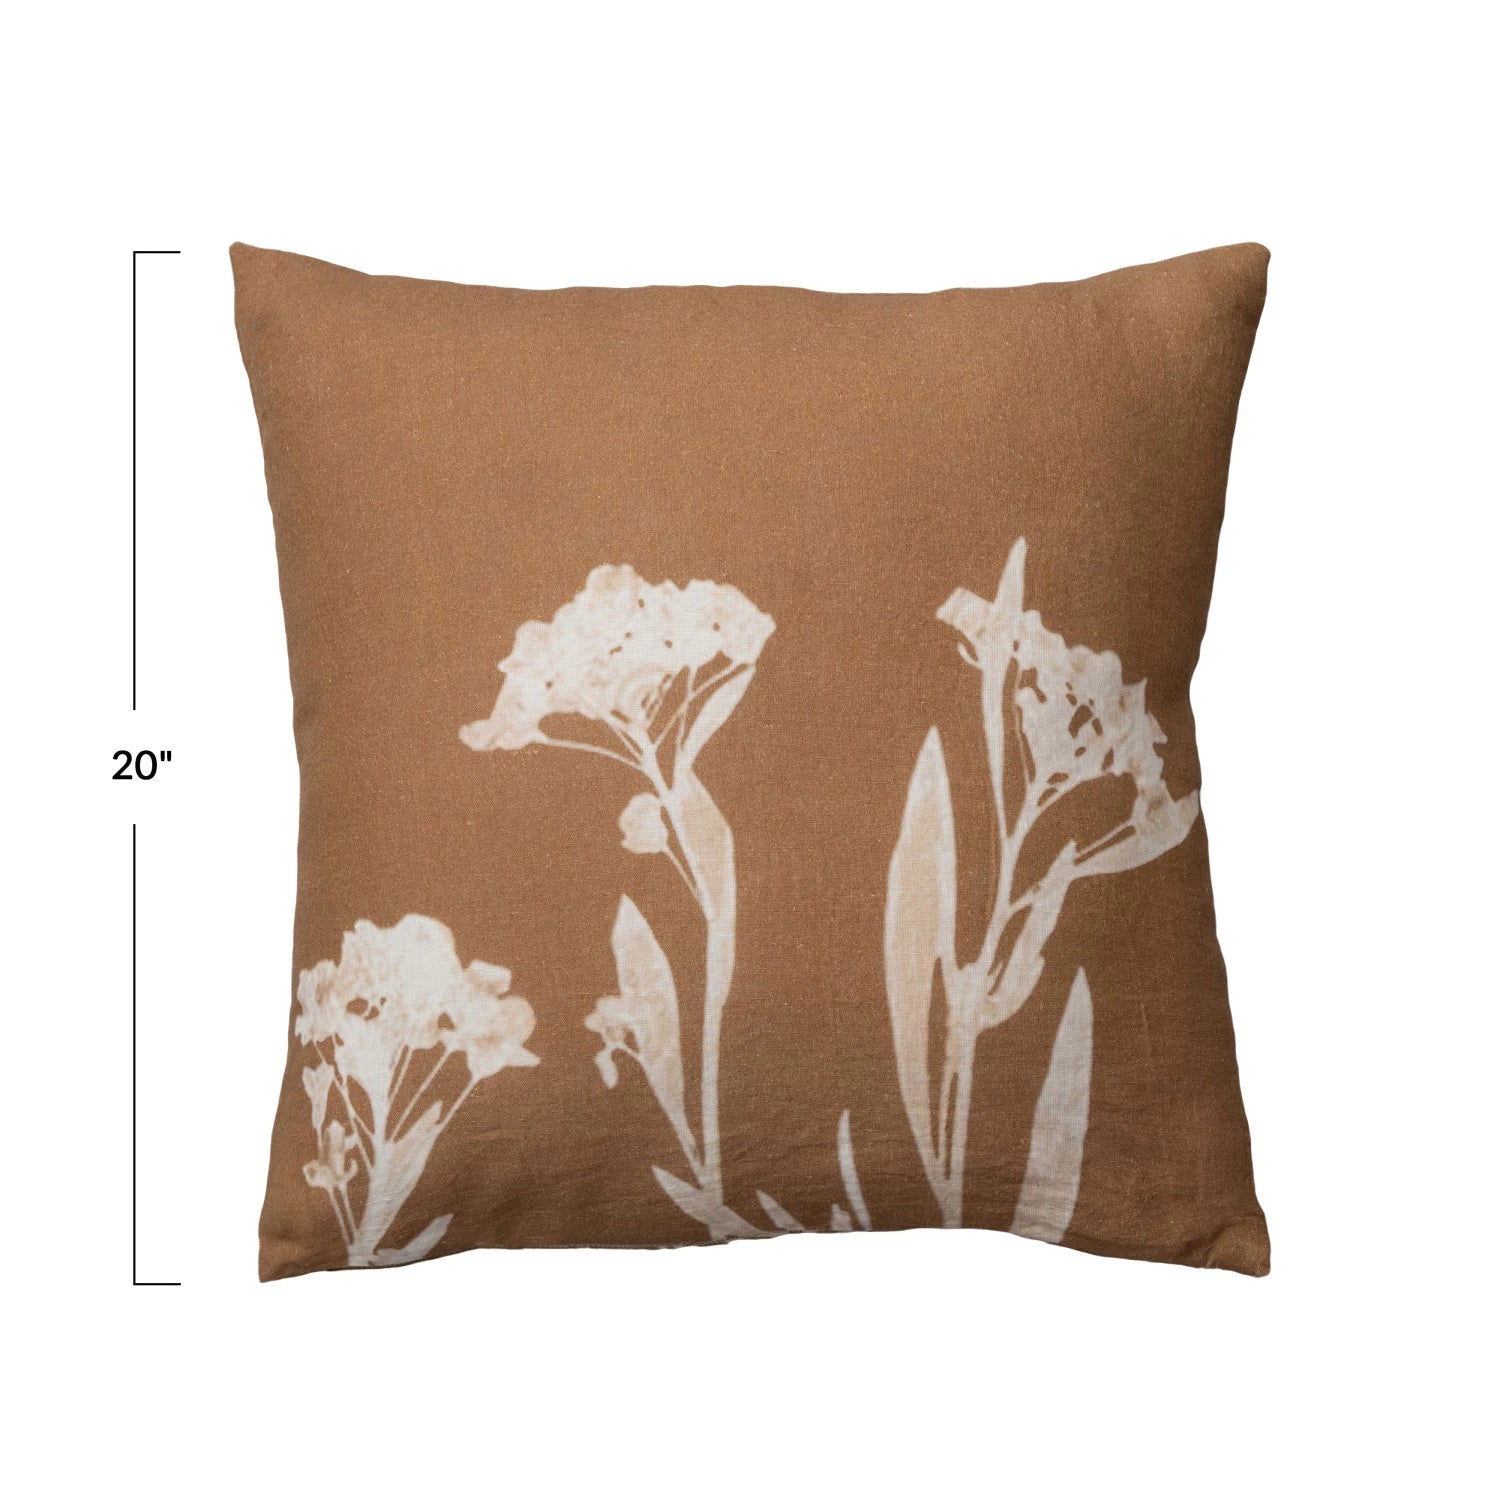 Brown & Natural Floral Linen Pillow